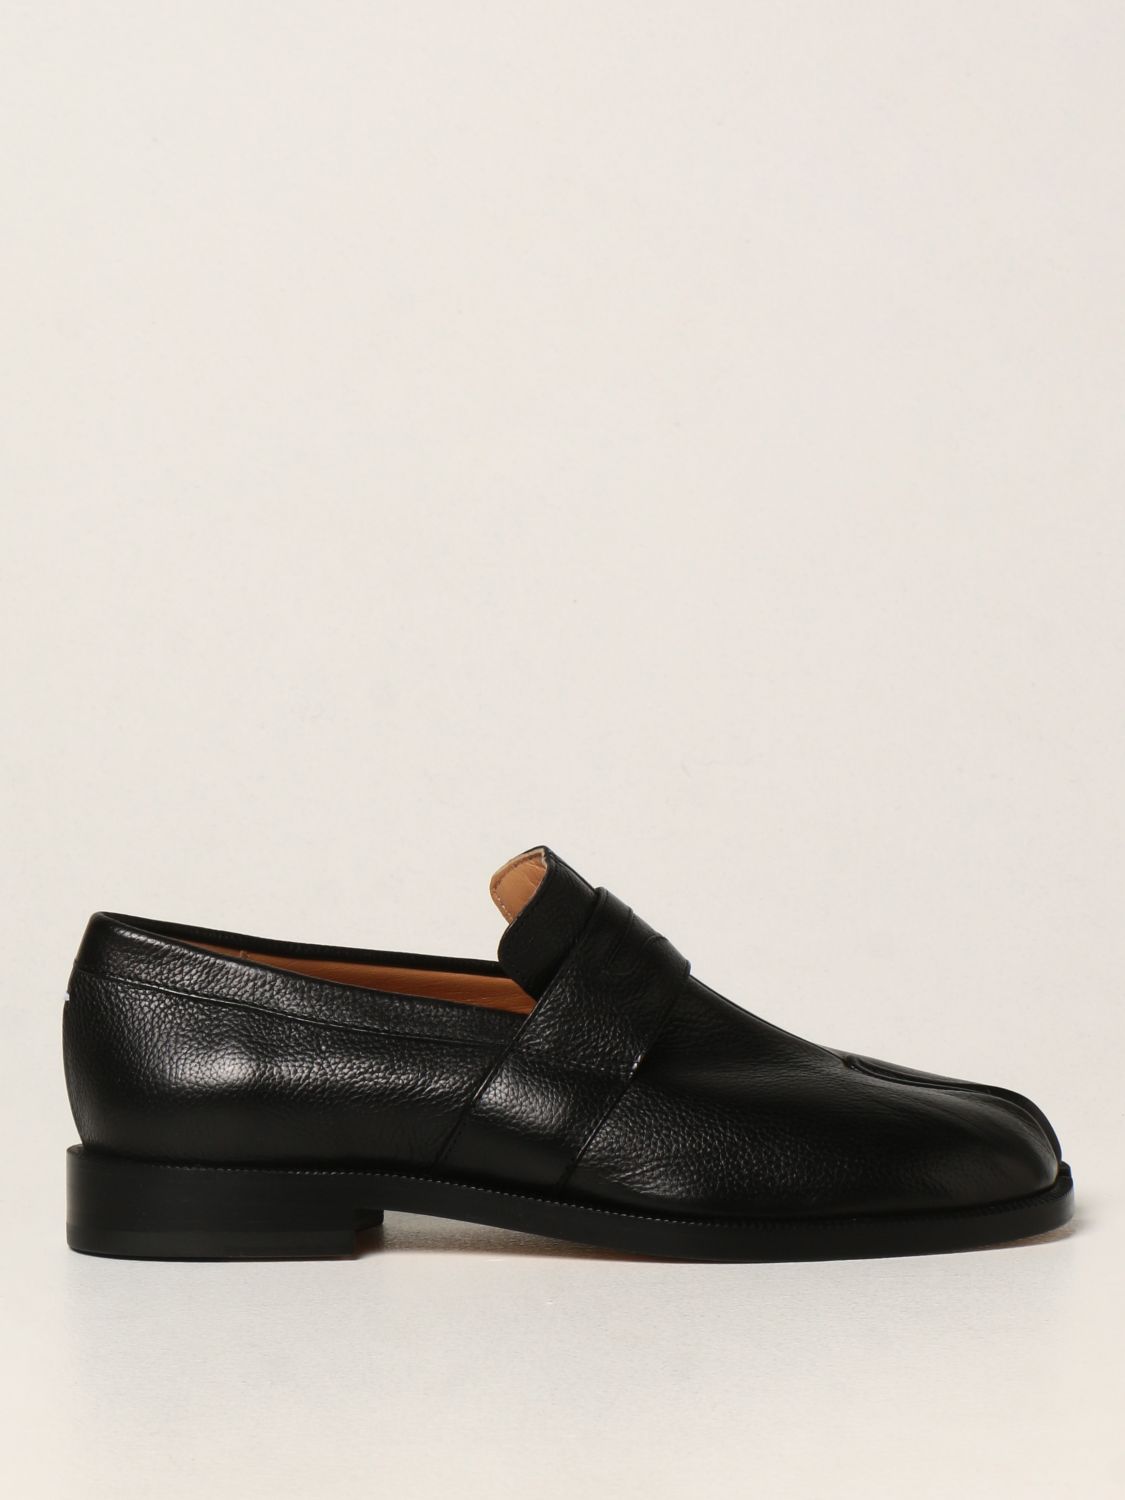 MAISON MARGIELA: Tabi split leather loafers - Black | Maison Margiela S58WR0035P4486 online on GIGLIO.COM